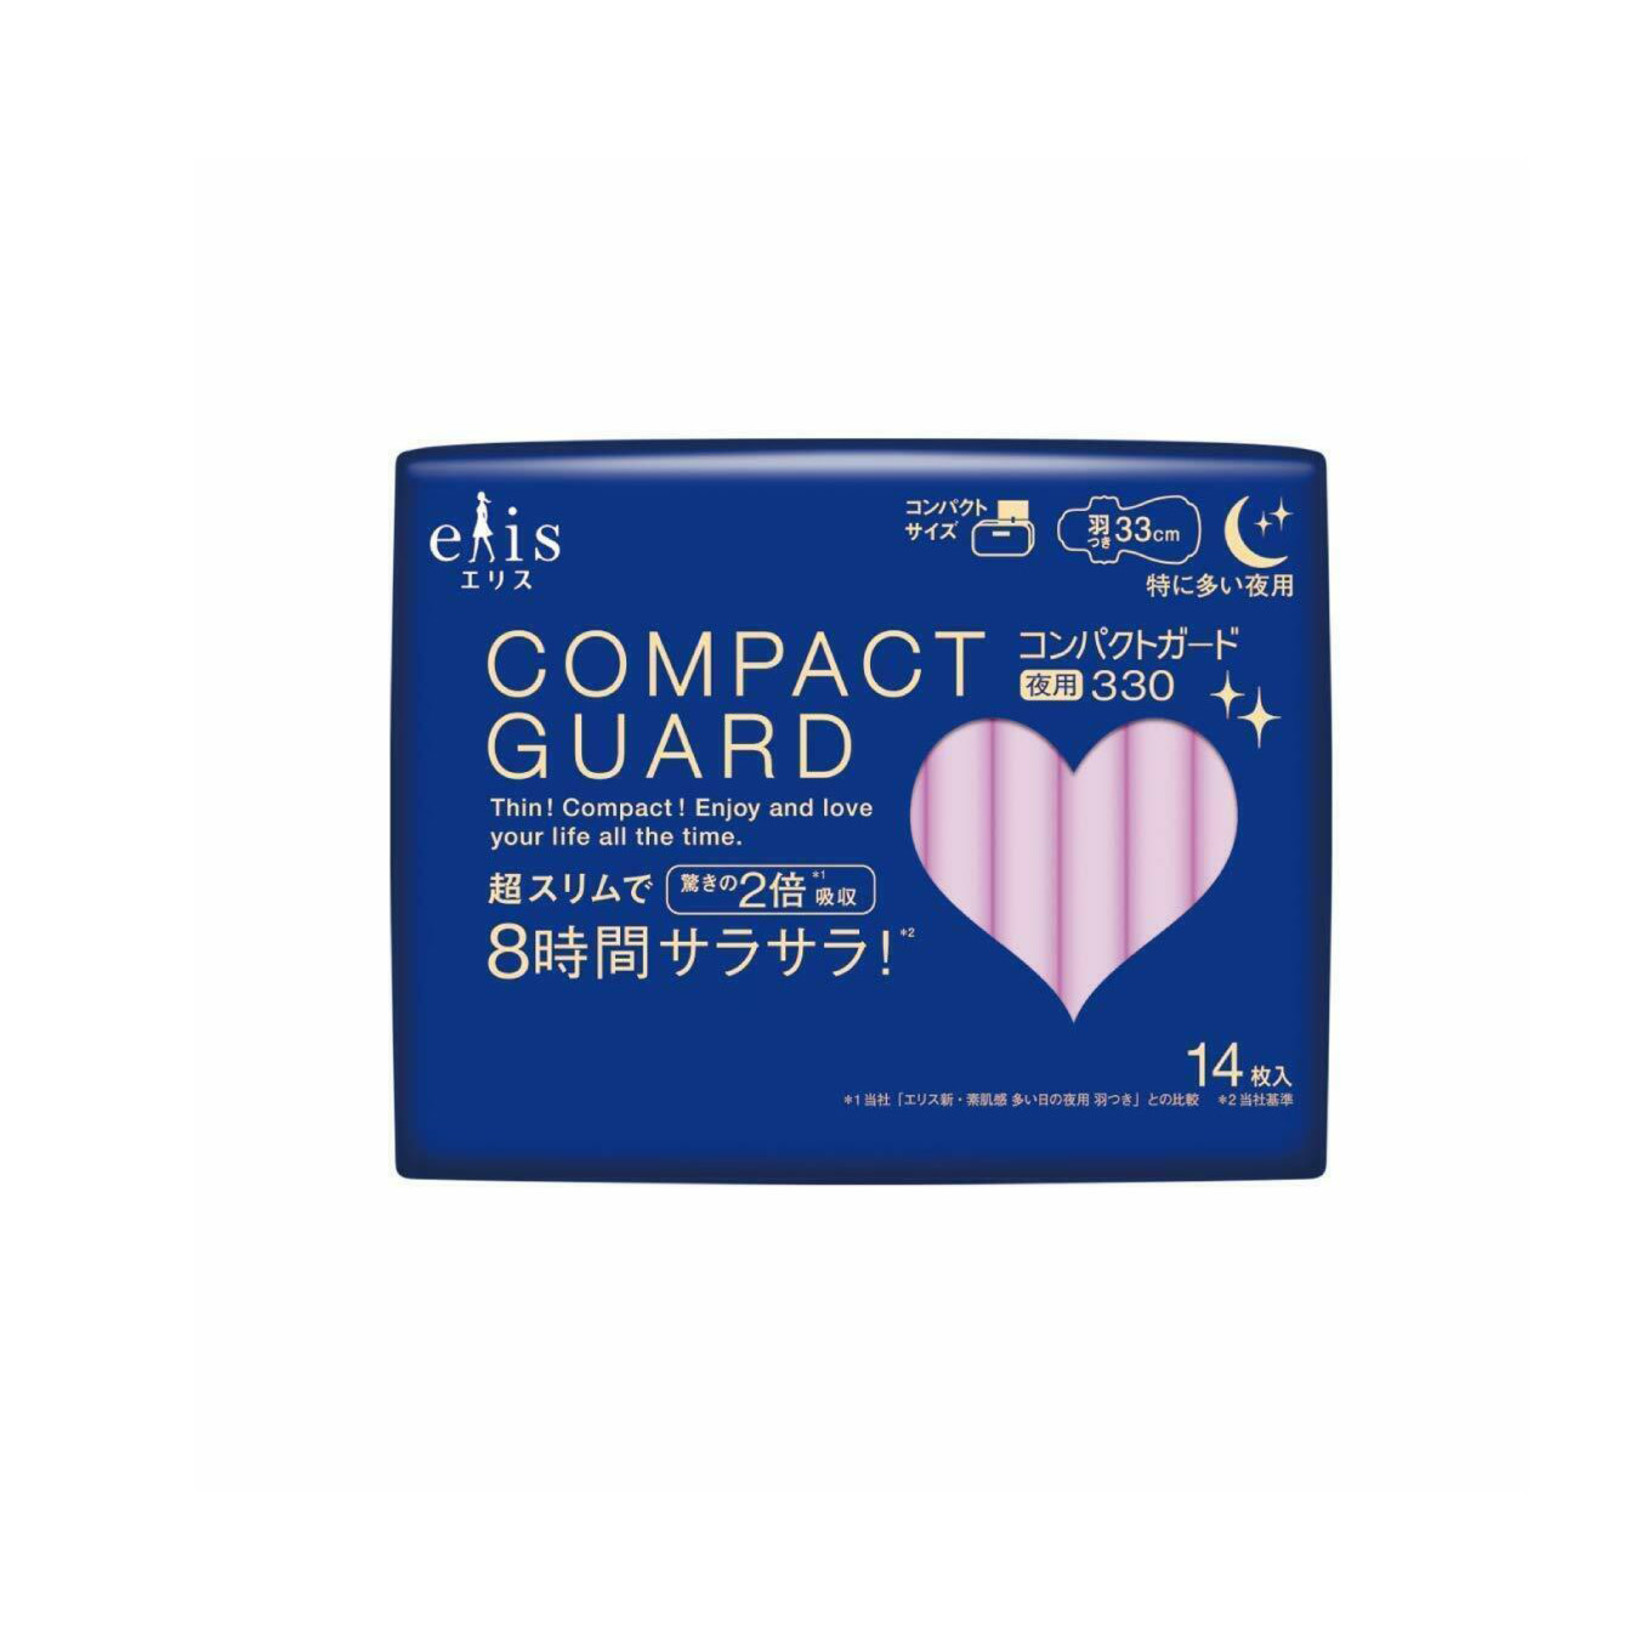 Elleair Elis Compact Guard Sanitary Napkin Especially Heavy Day Overnight 33cm